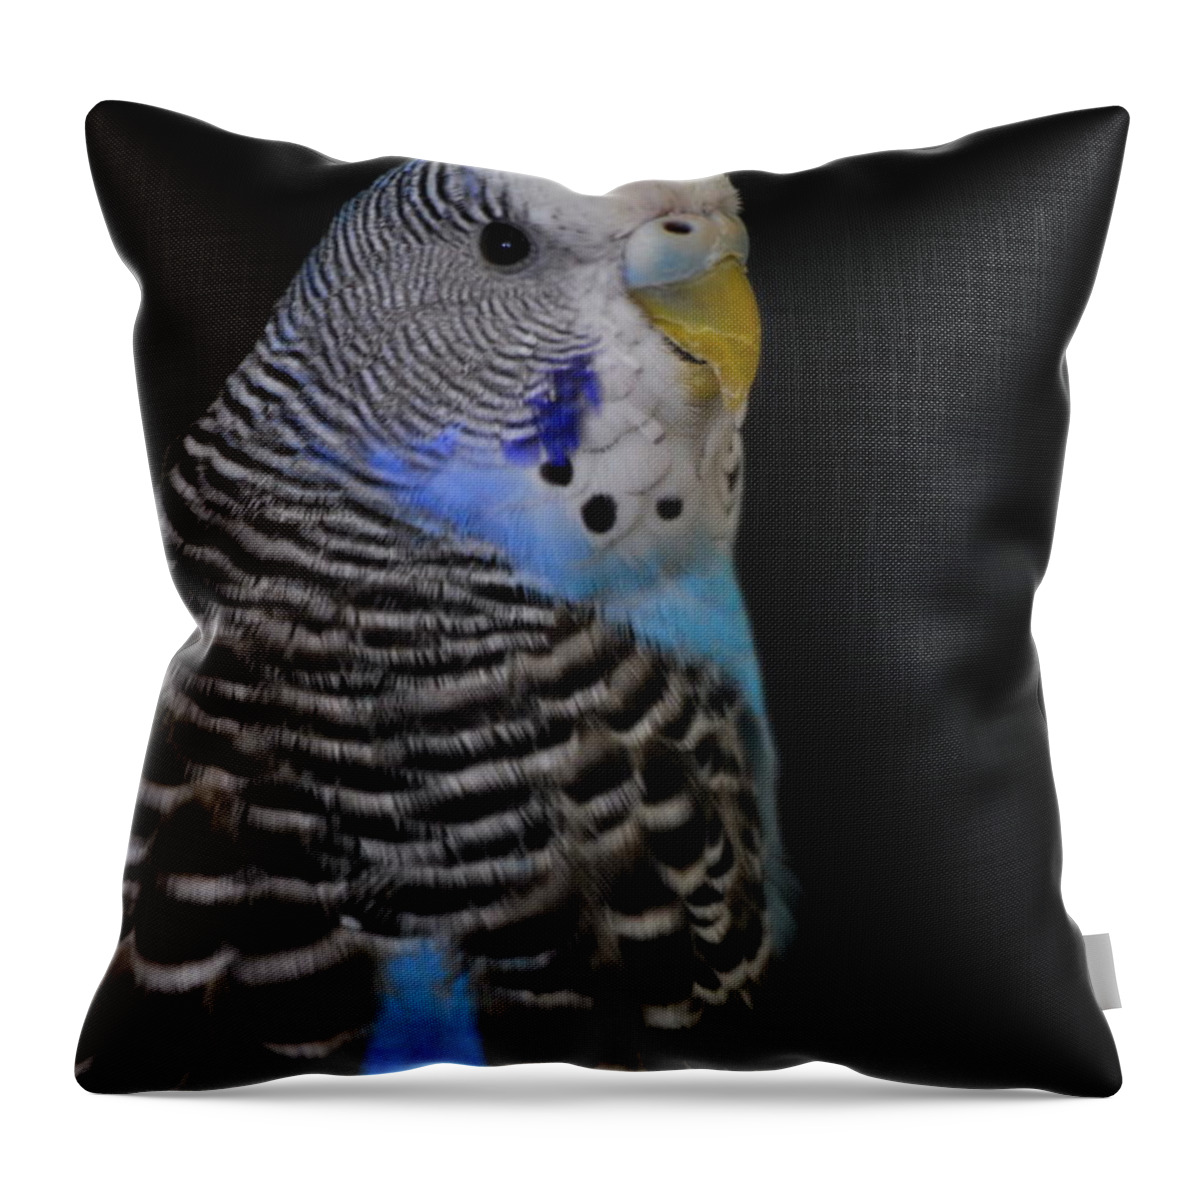 Budgie Throw Pillow featuring the photograph Blue Budgie Parakeet by Nathan Abbott